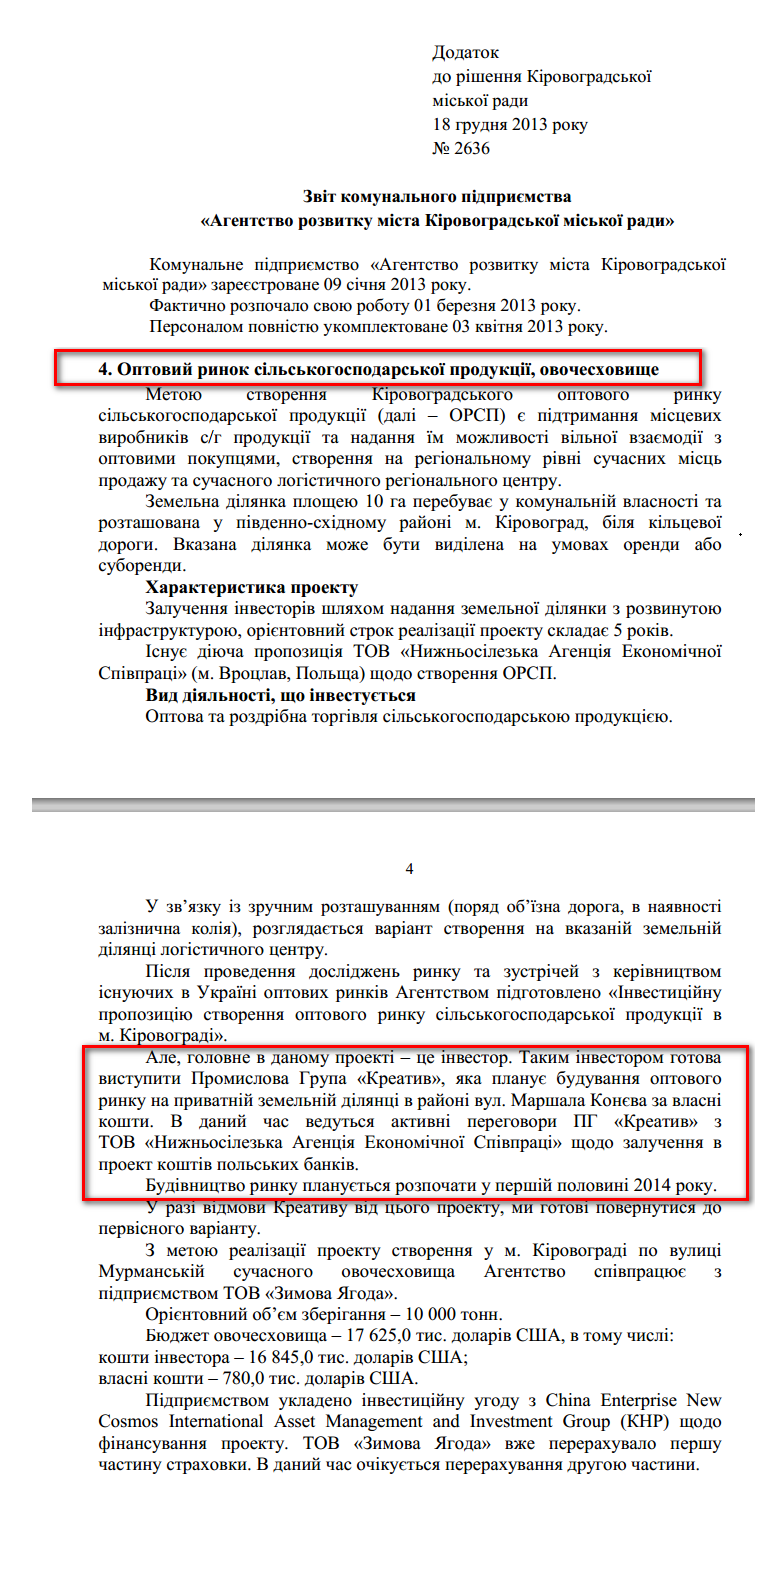 http://www.kr-rada.gov.ua/files/decision/ua-rishennya-dodatok-2636-18-12-13.pdf